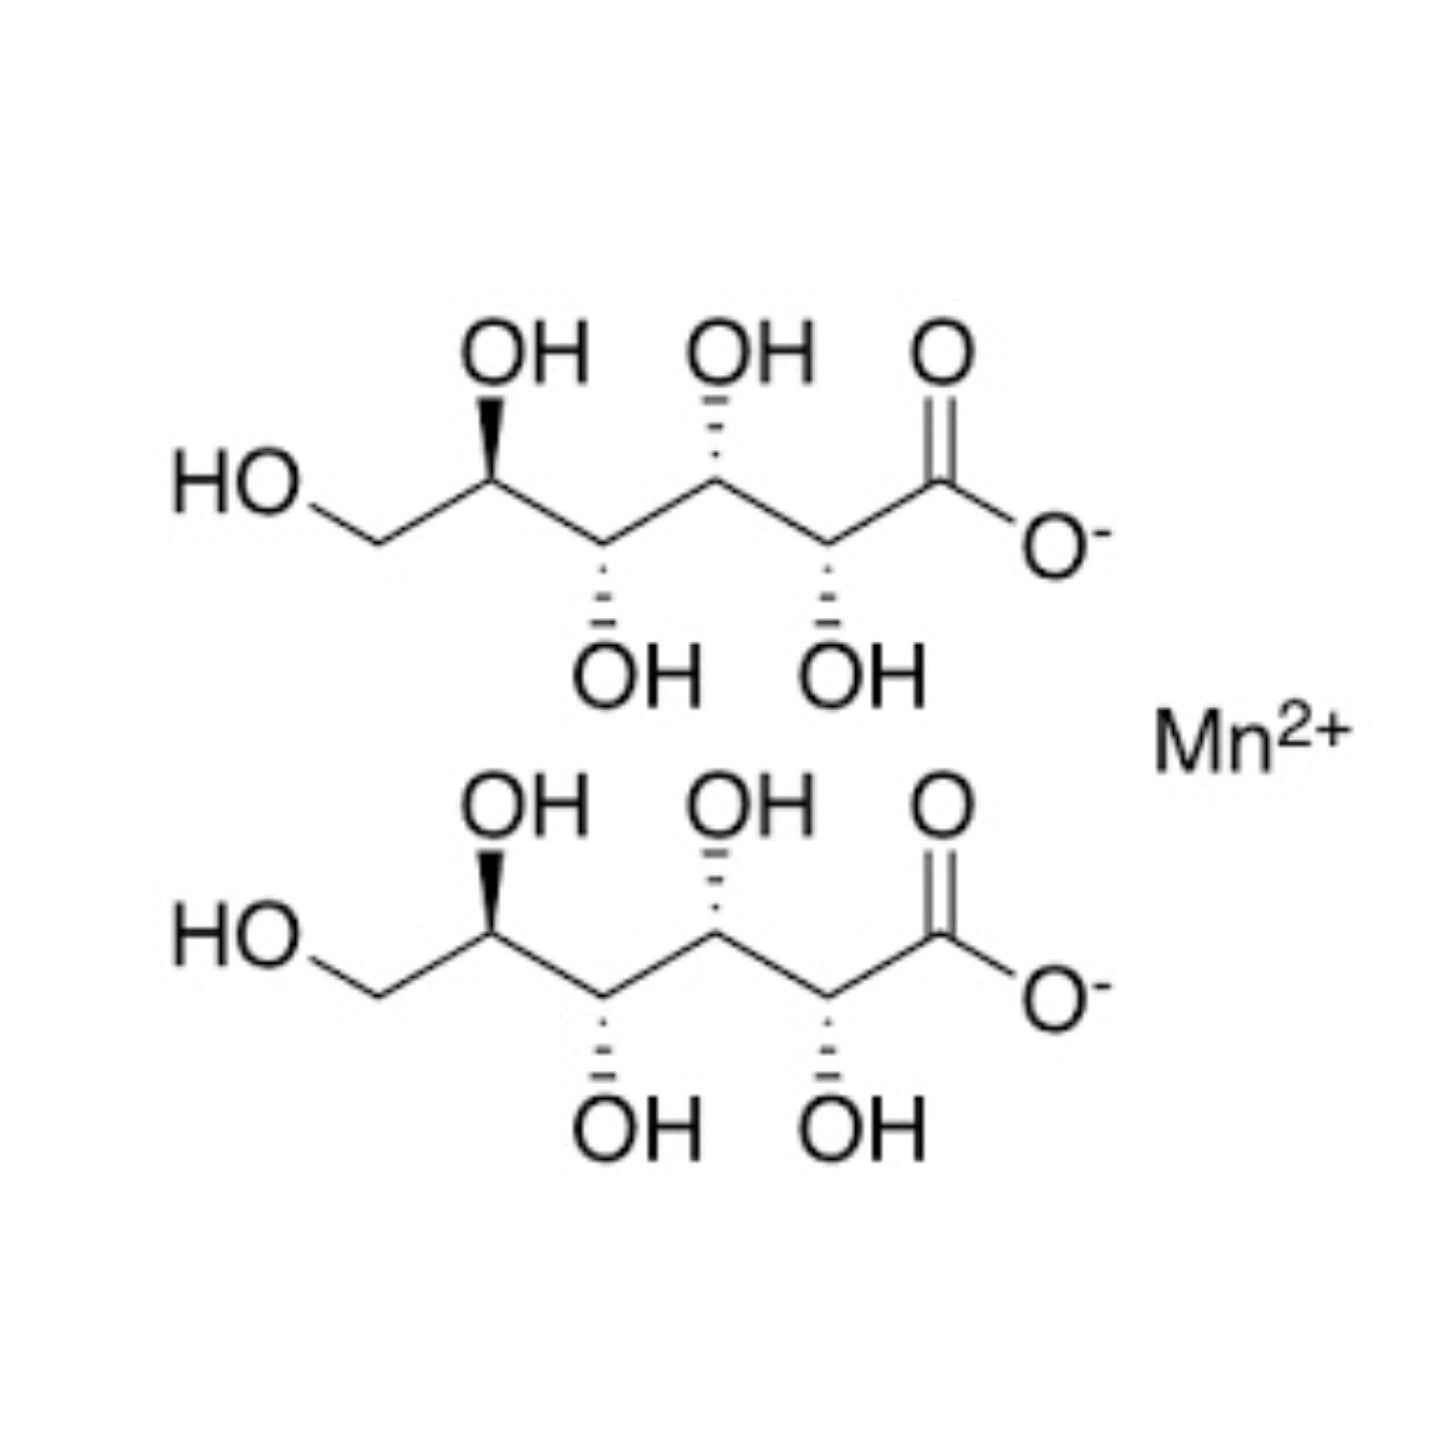 2 Manganese Gluconate - (200 mg Maximum Daily Dosage) - Two Ingredients